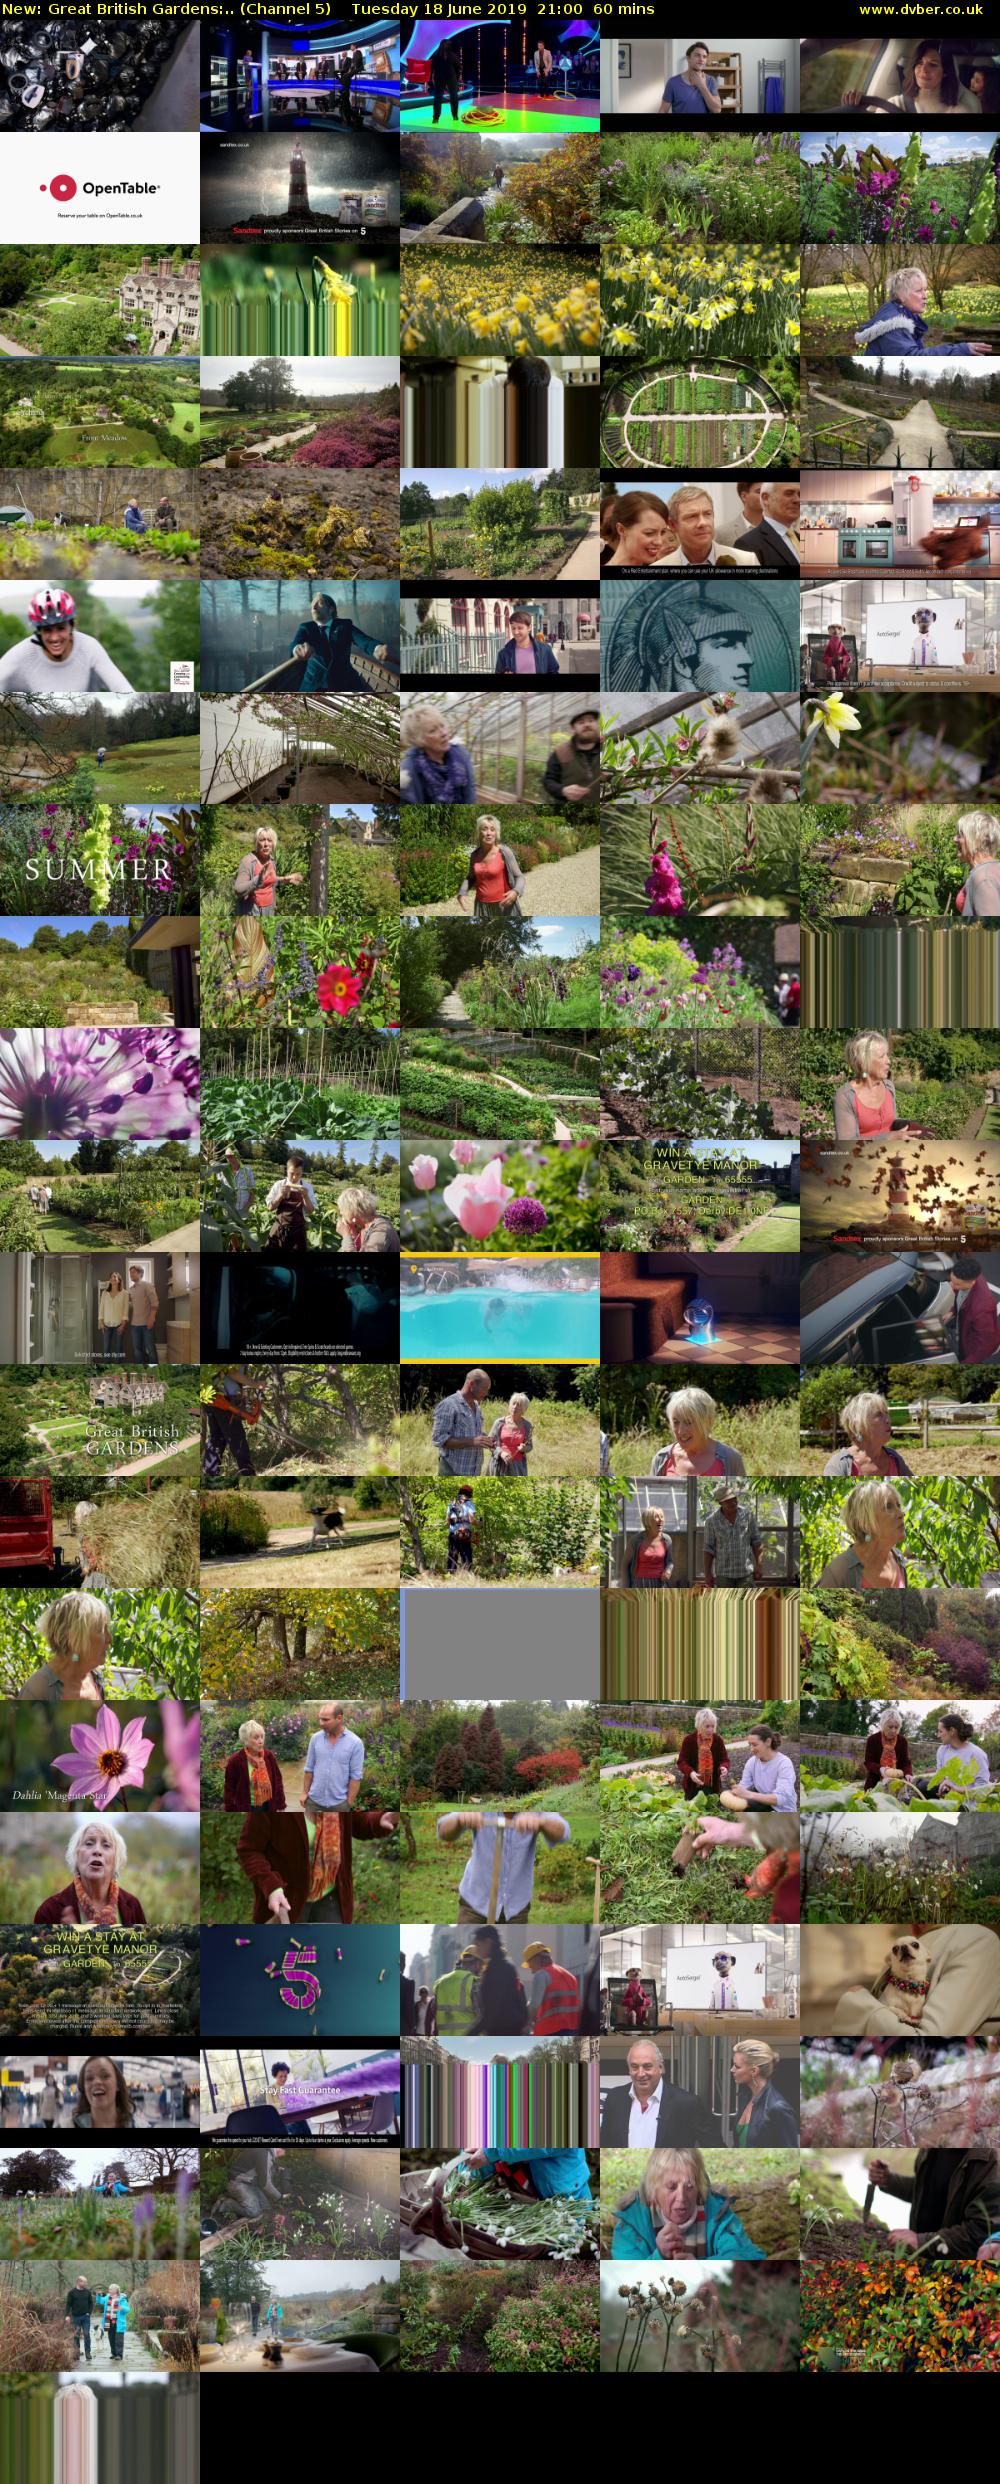 Great British Gardens:.. (Channel 5) Tuesday 18 June 2019 21:00 - 22:00